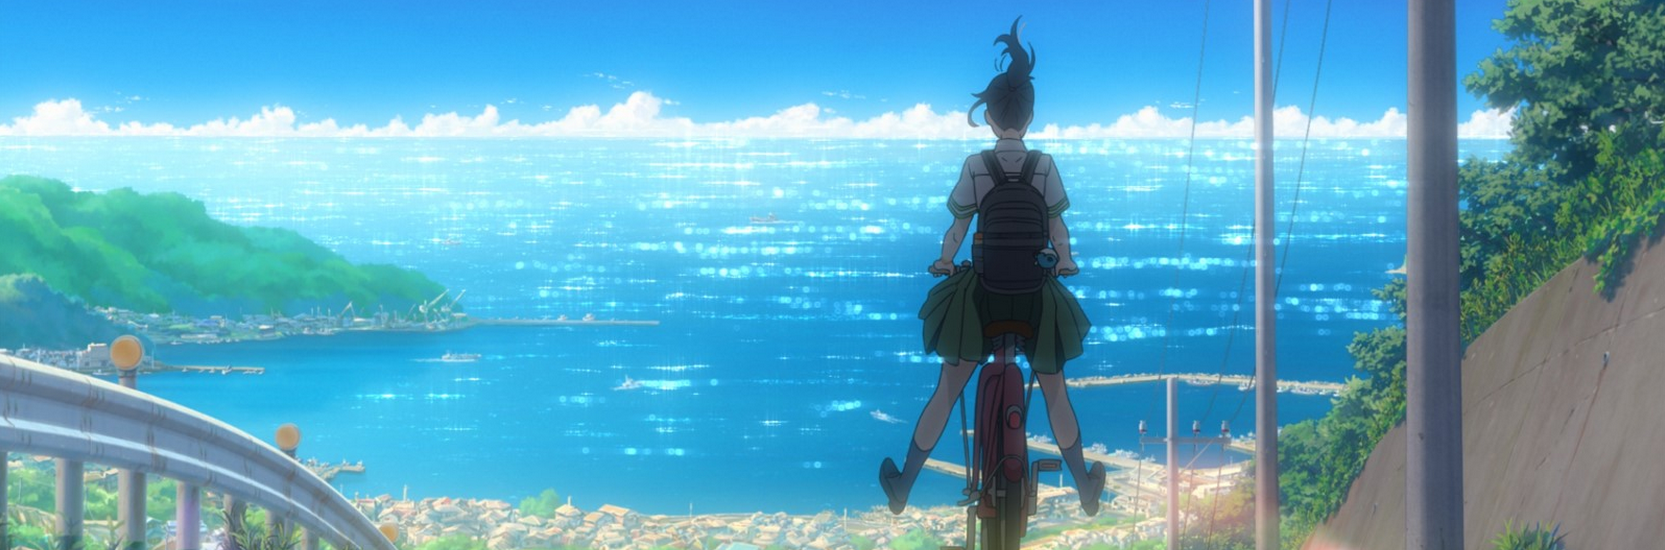  « Suzume », le dernier film de Makoto Shinkai – Analyse Critique